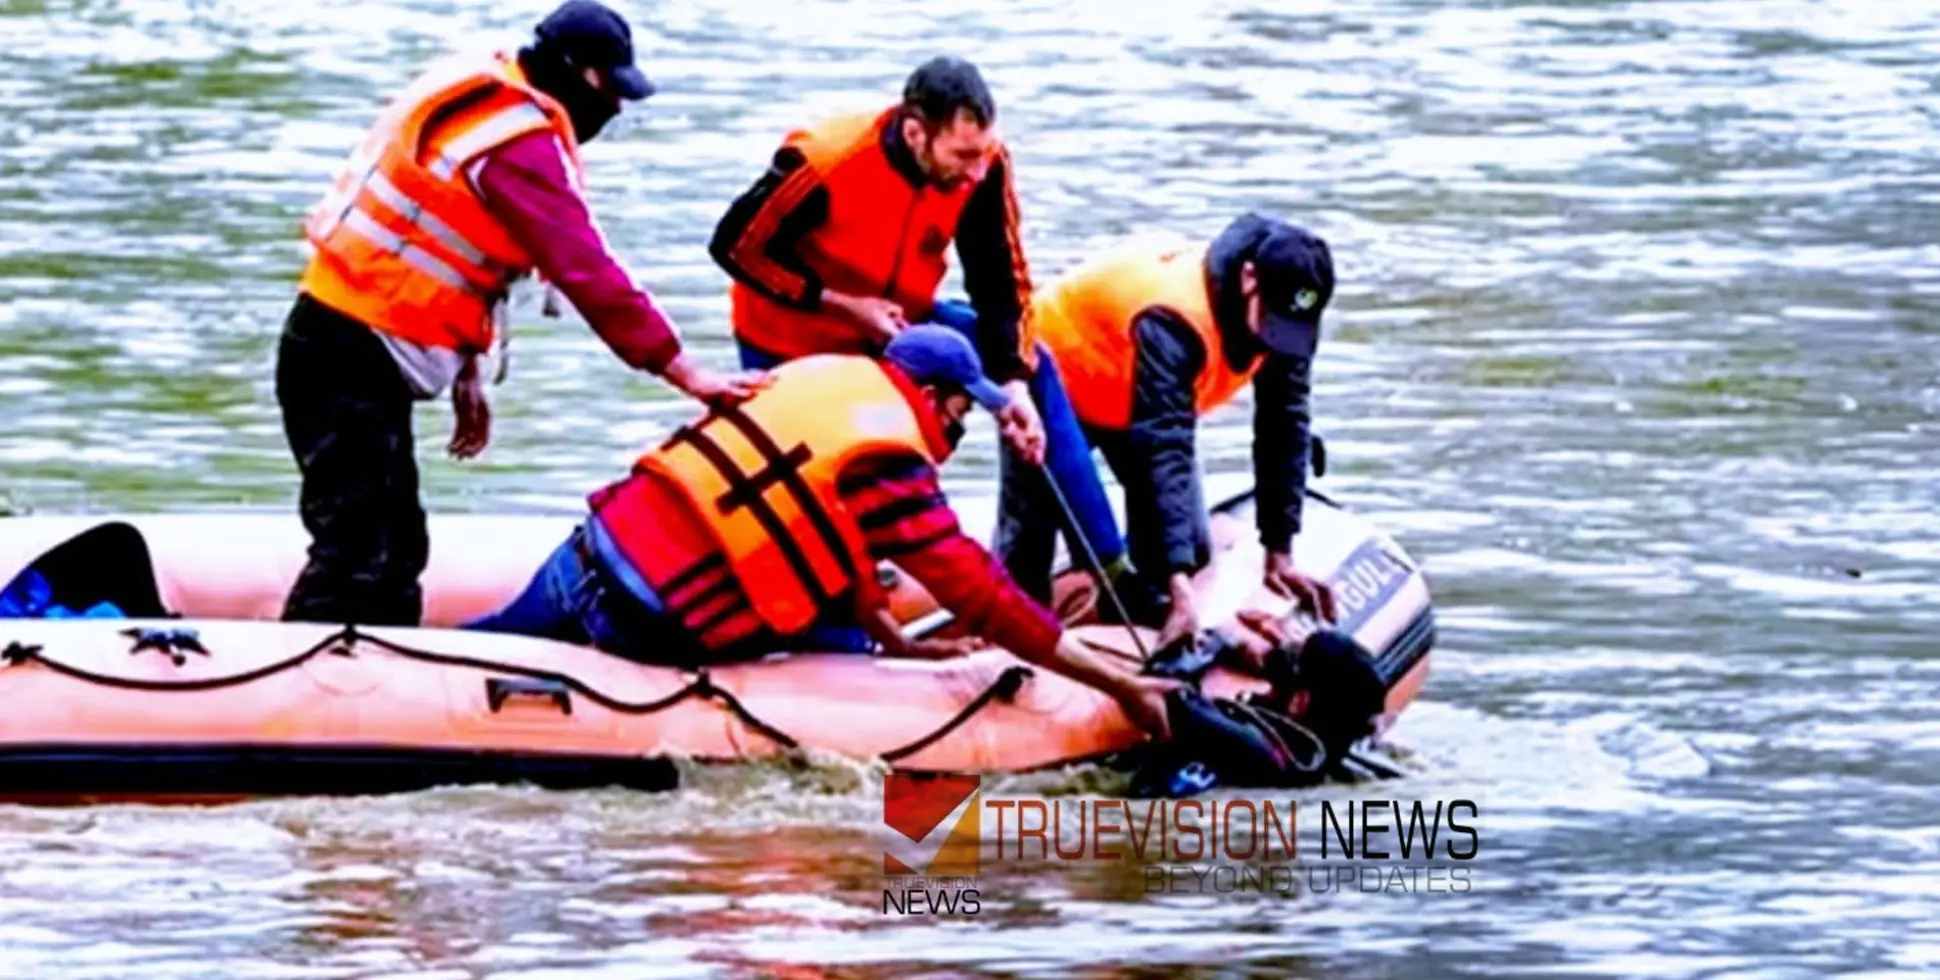 #Boataccident | ഒഡീഷയിലെ മഹാനദിയിൽ ബോട്ട് മറിഞ്ഞ് അപകടം; മരണം നാലായി 